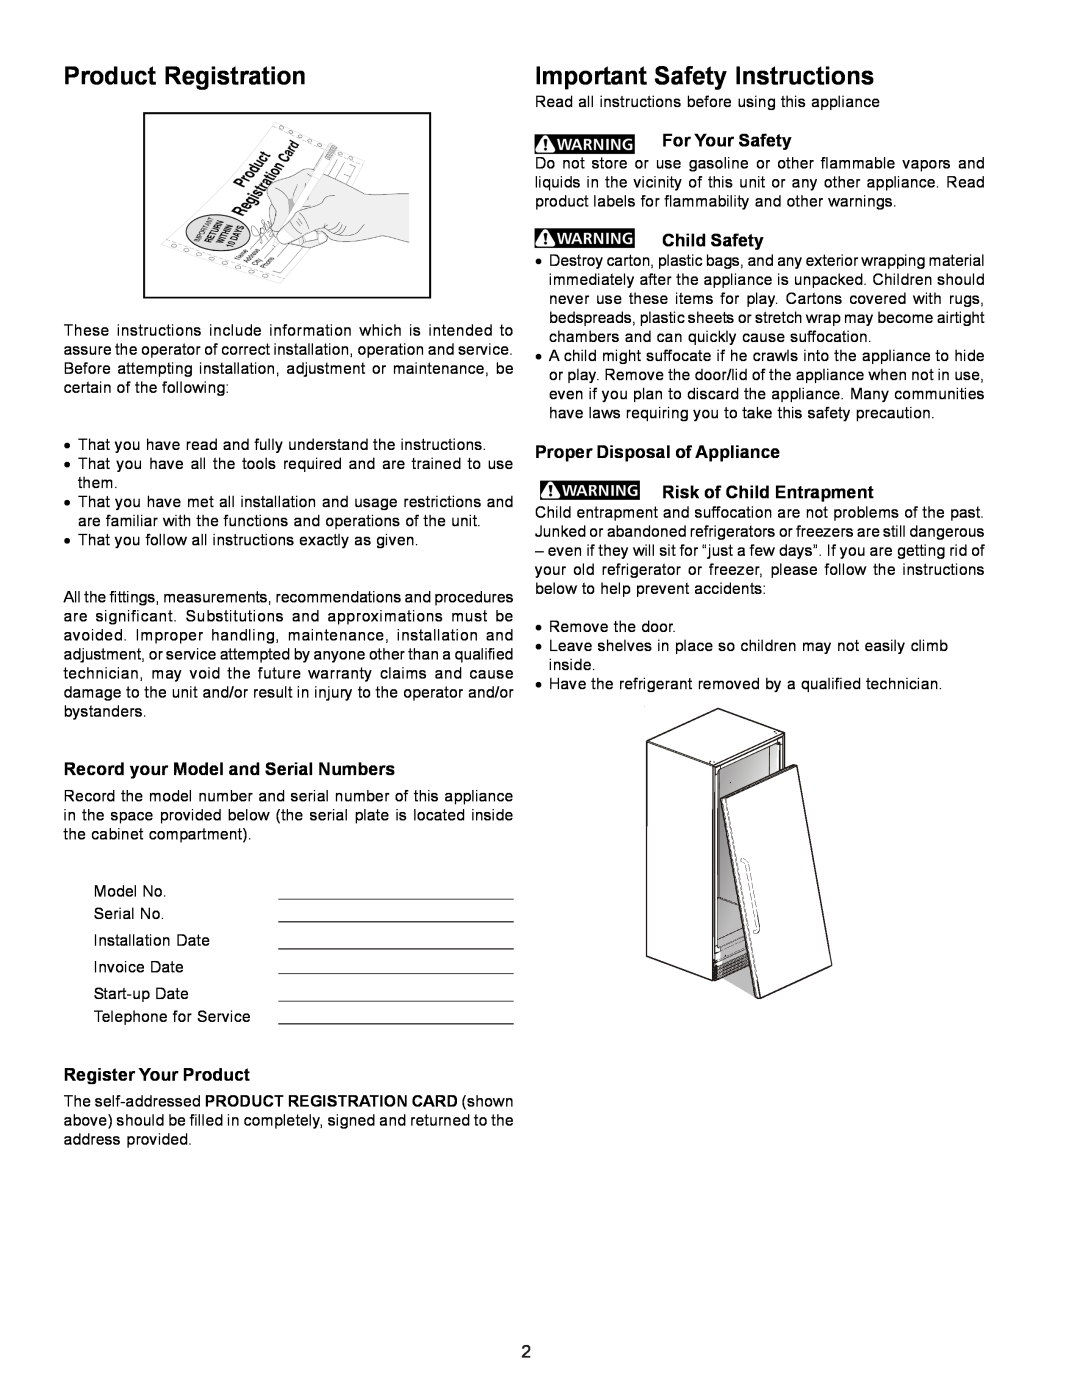 Frigidaire FREEZER/REFRIGERATOR GLASS DOOR REFRIGERATOR Product Registration, Important Safety Instructions, Child Safety 